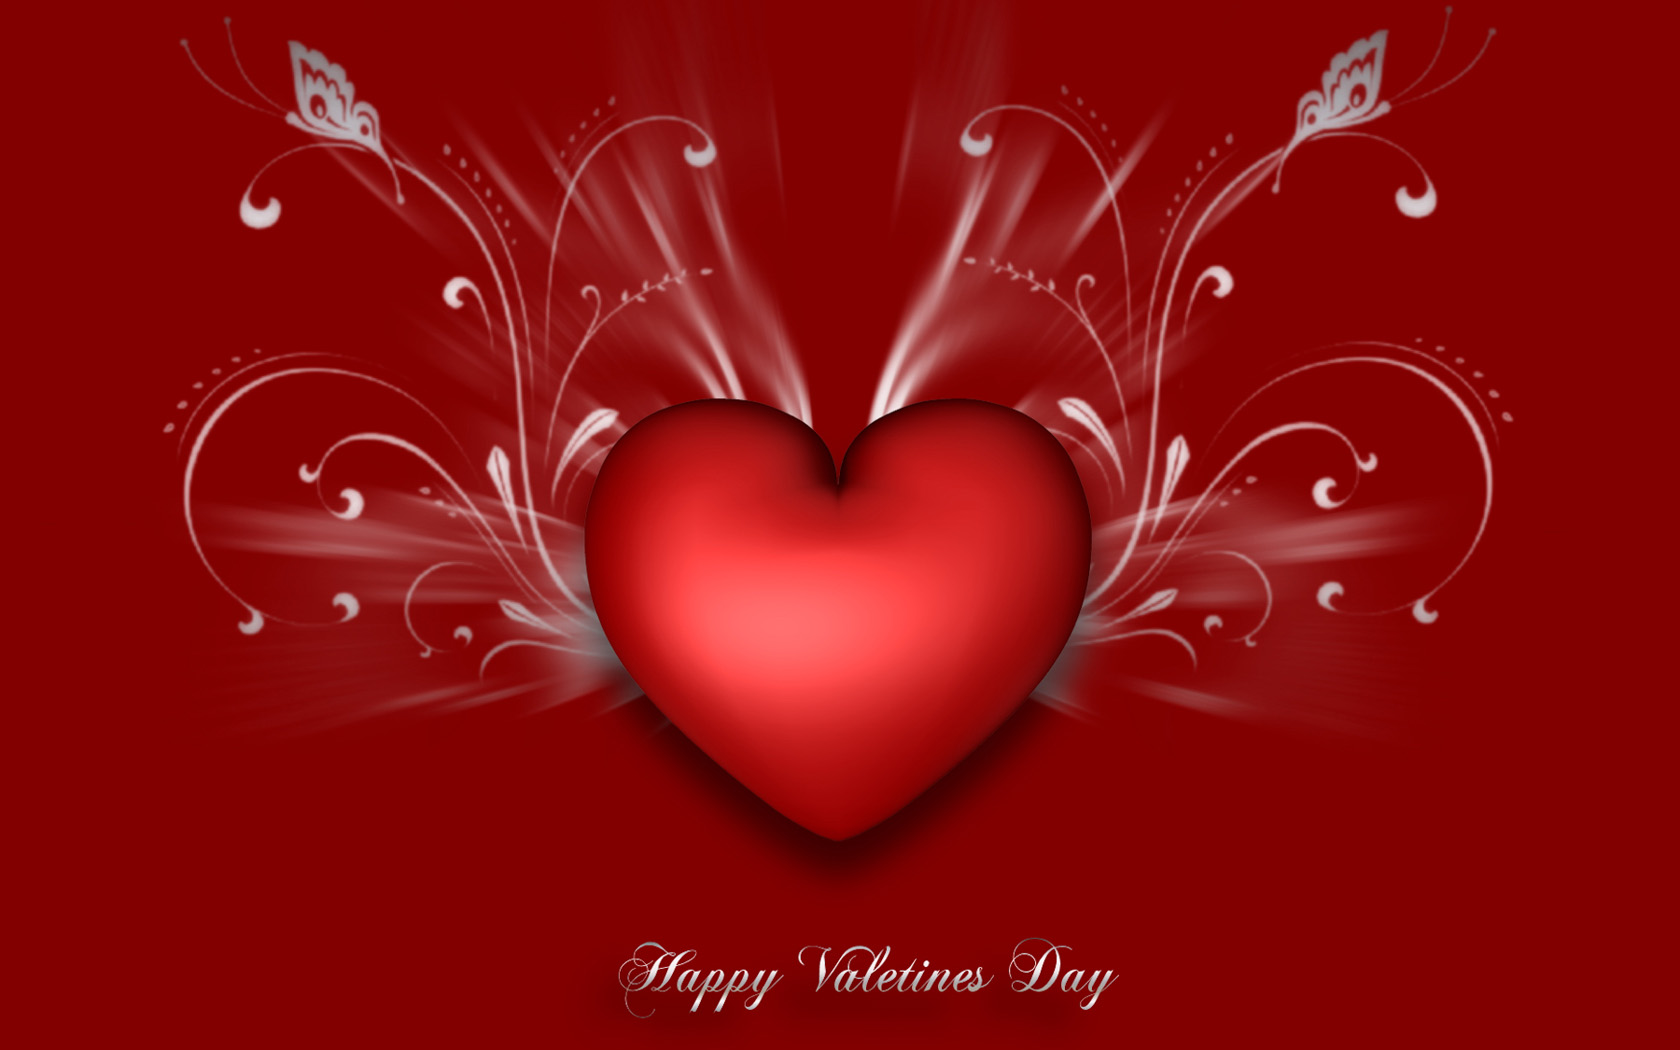 valentine images free download